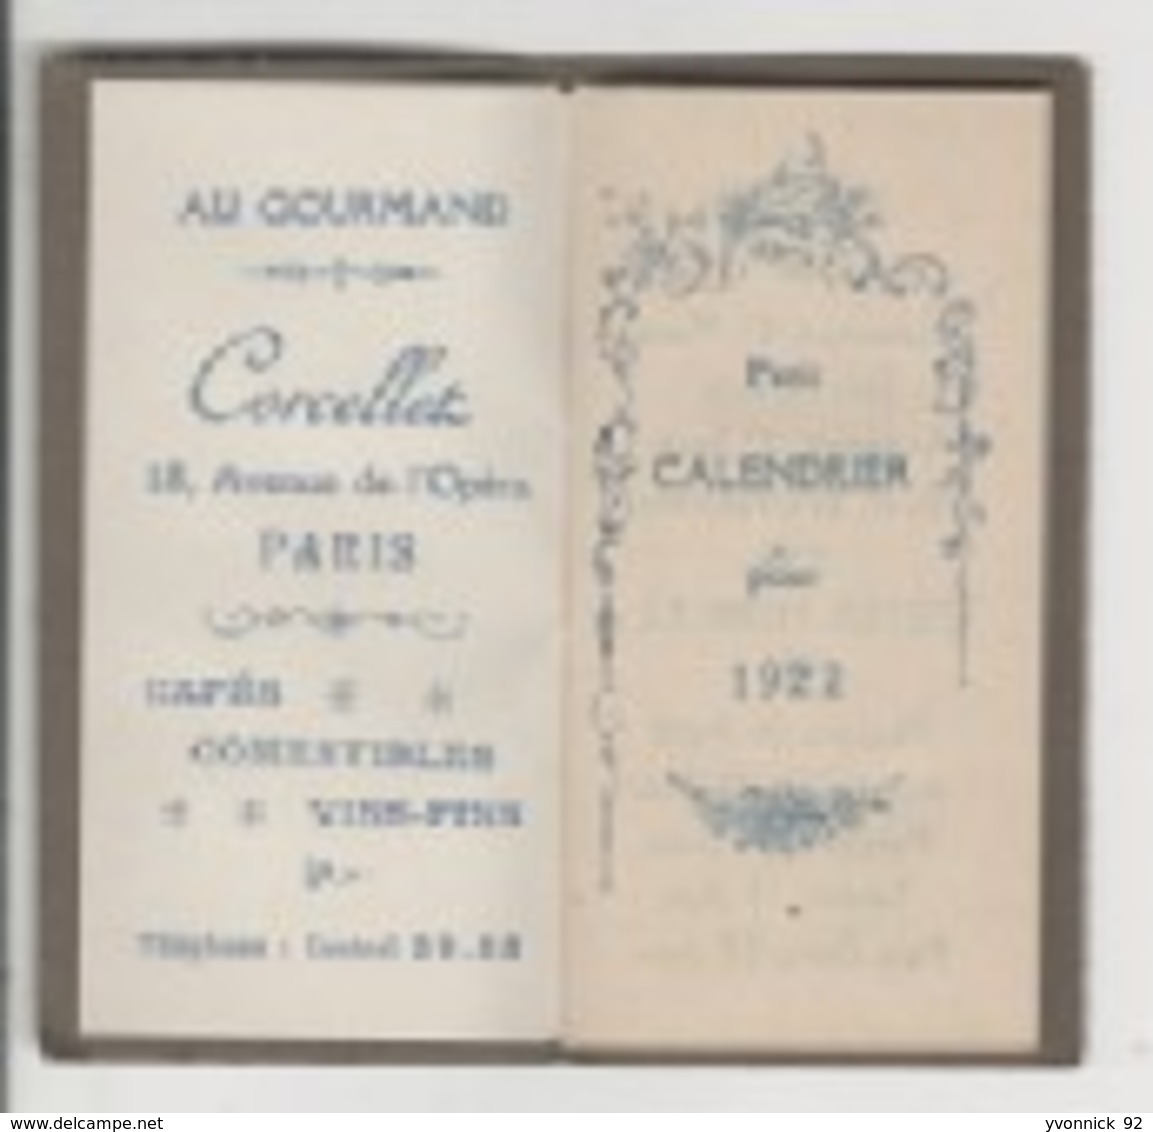 Calendriers - PF_ 1922  Carton Décoré   (TTB) 4x 7.5 Cm - Groot Formaat: ...-1900